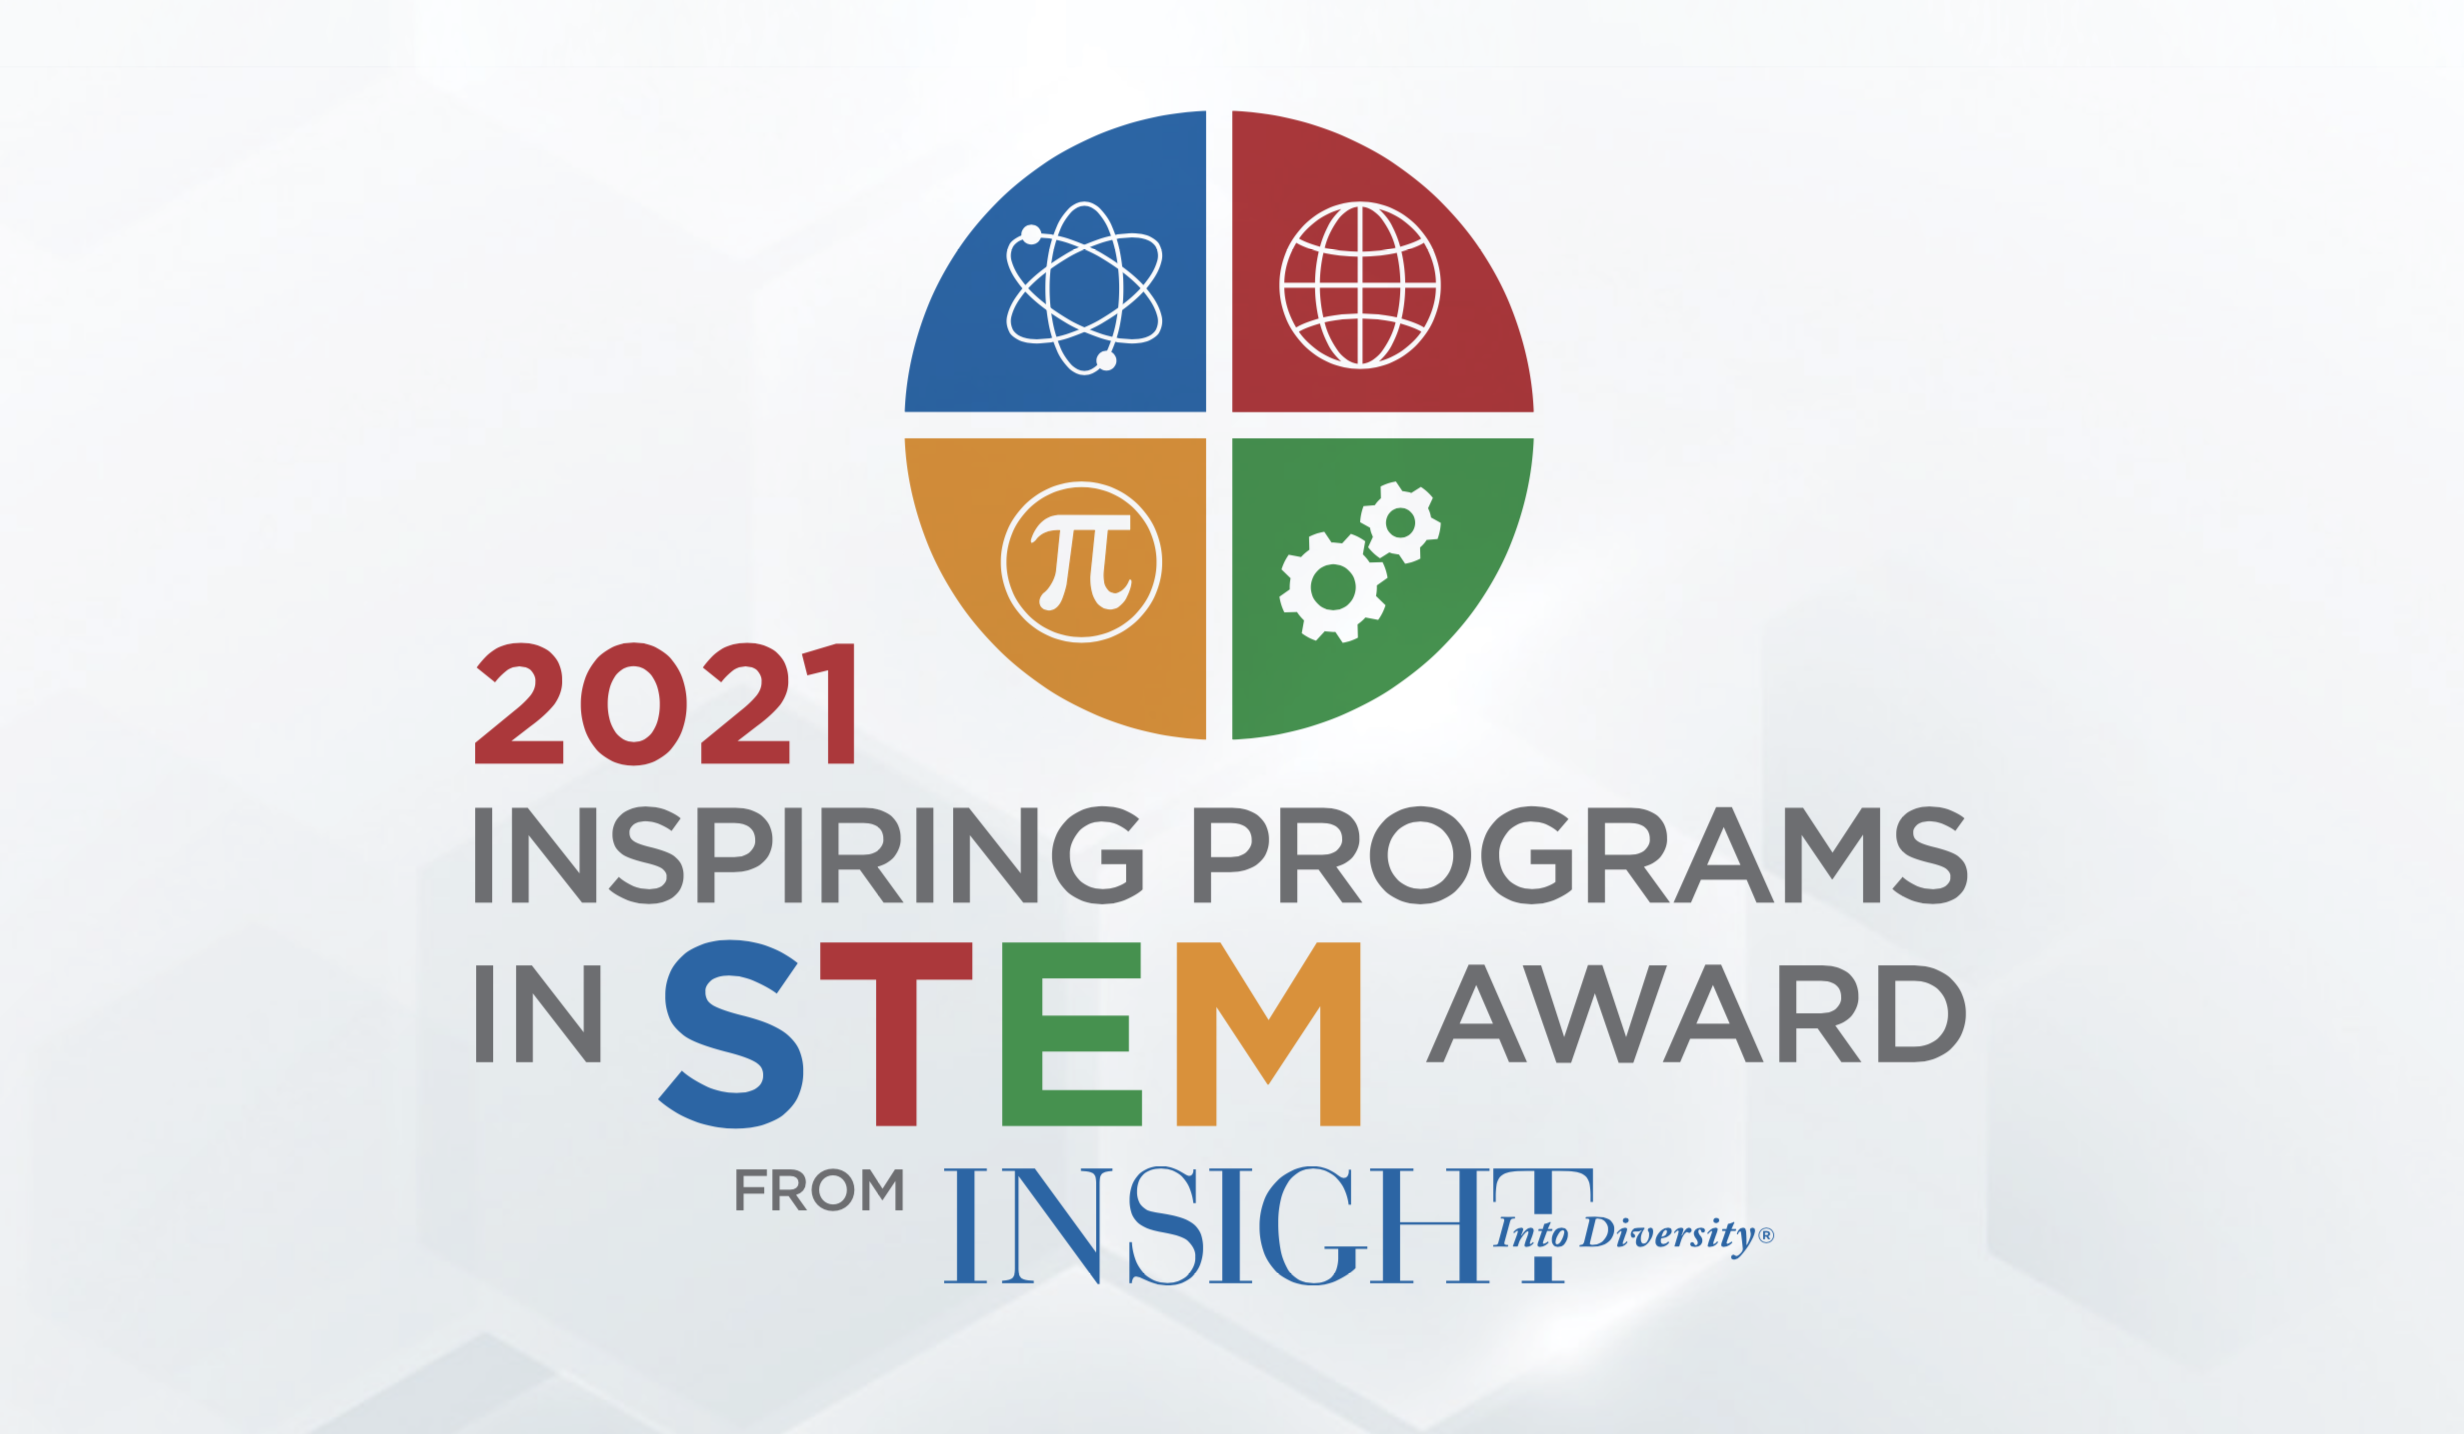 2021 Inspiring Programs in STEM Award, Insight Into Diversity